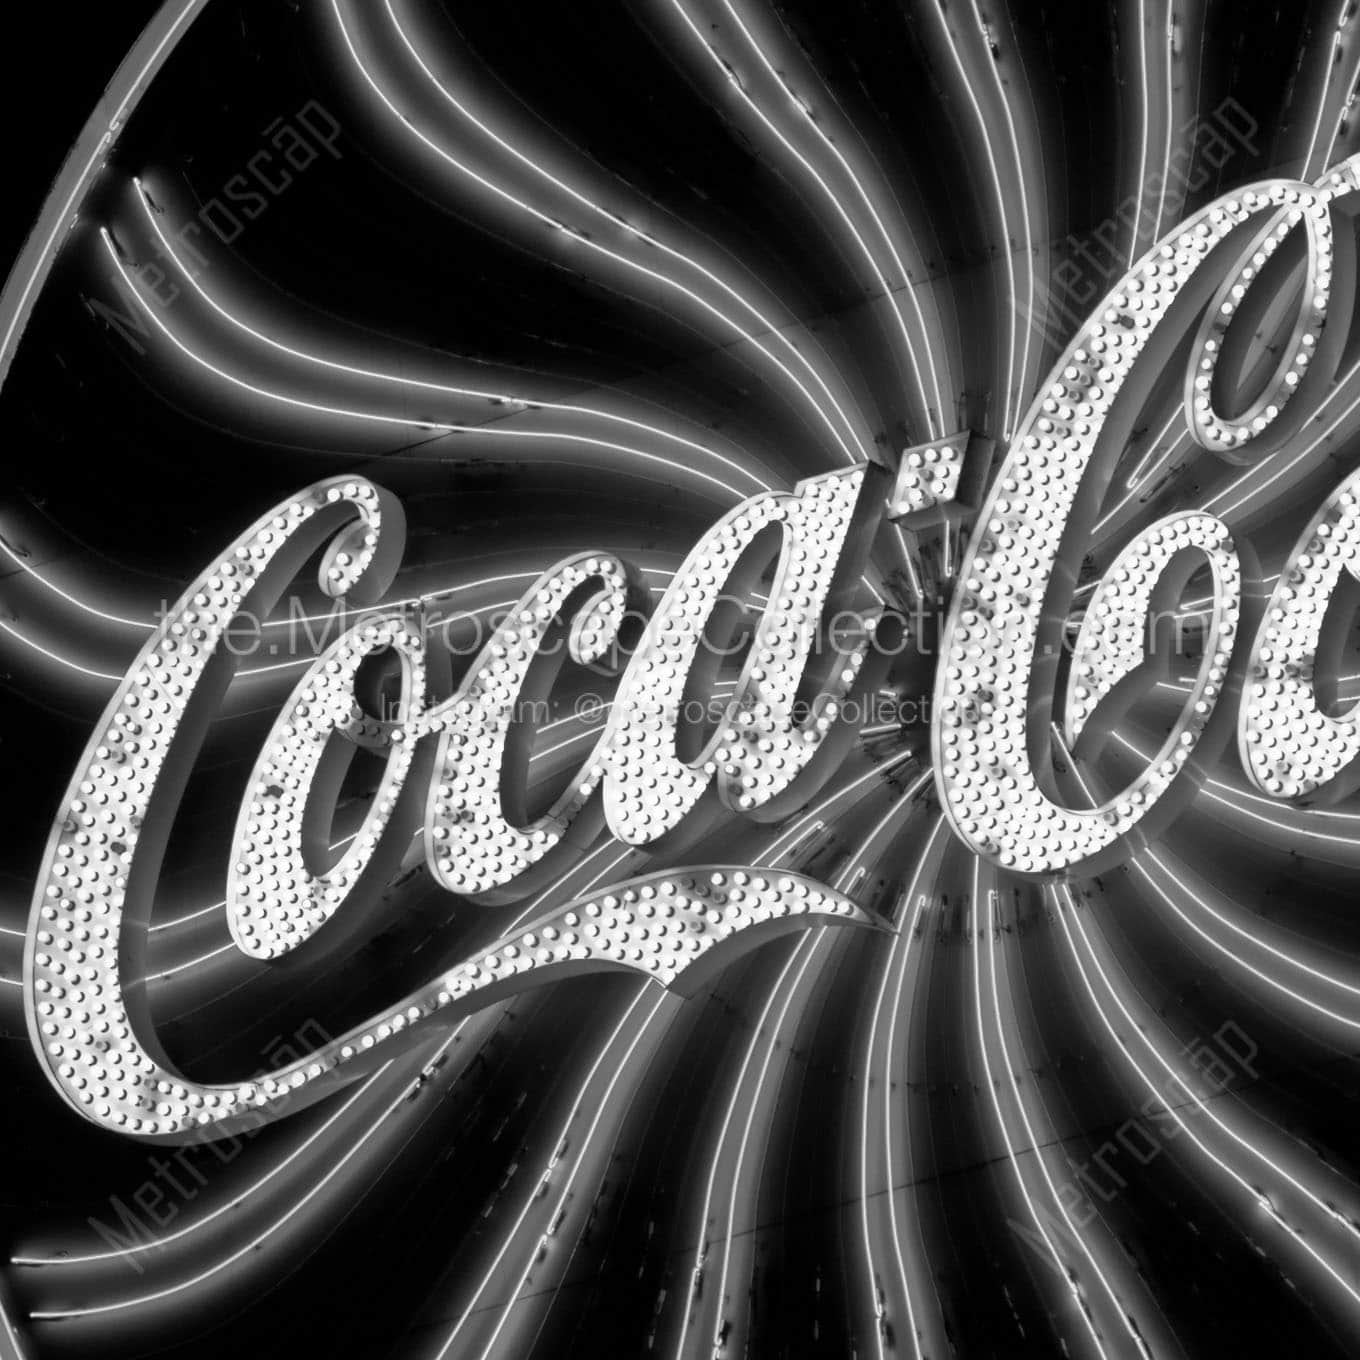 coca cola sign Black & White Office Art